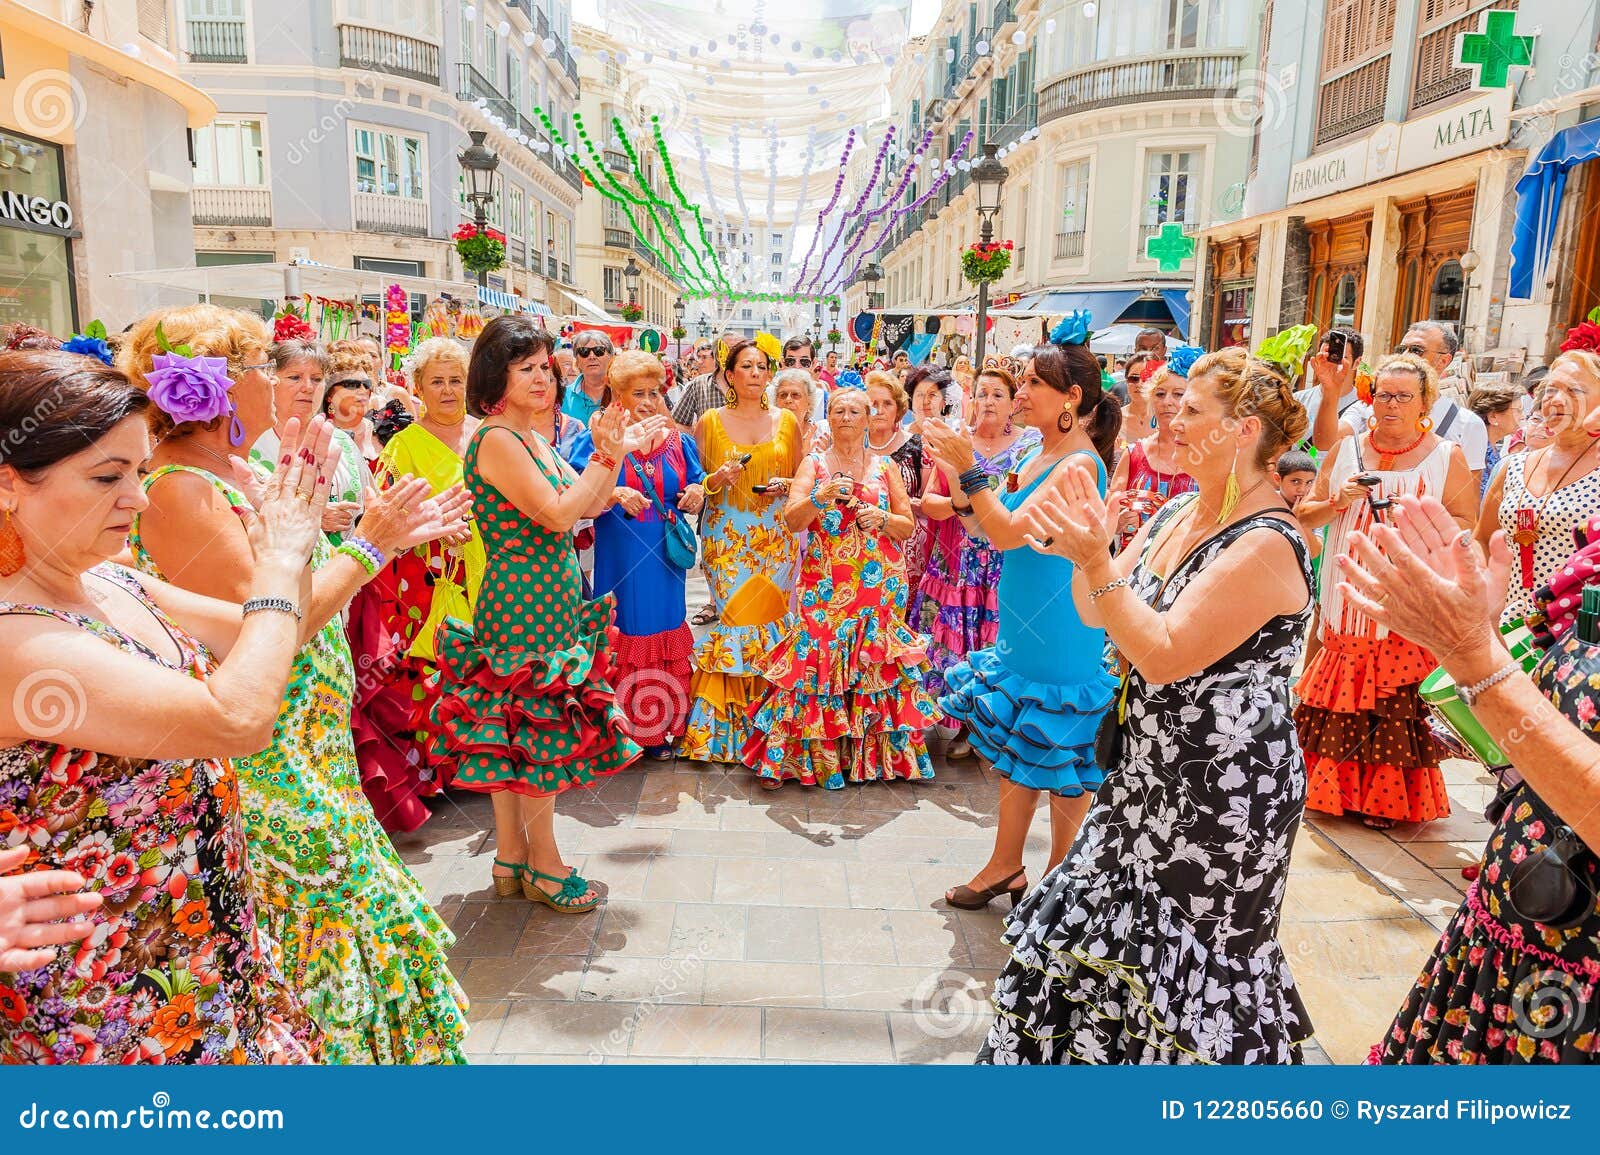 The Inhabitants of Malaga, Dressed in Regional Costumes, are Dan